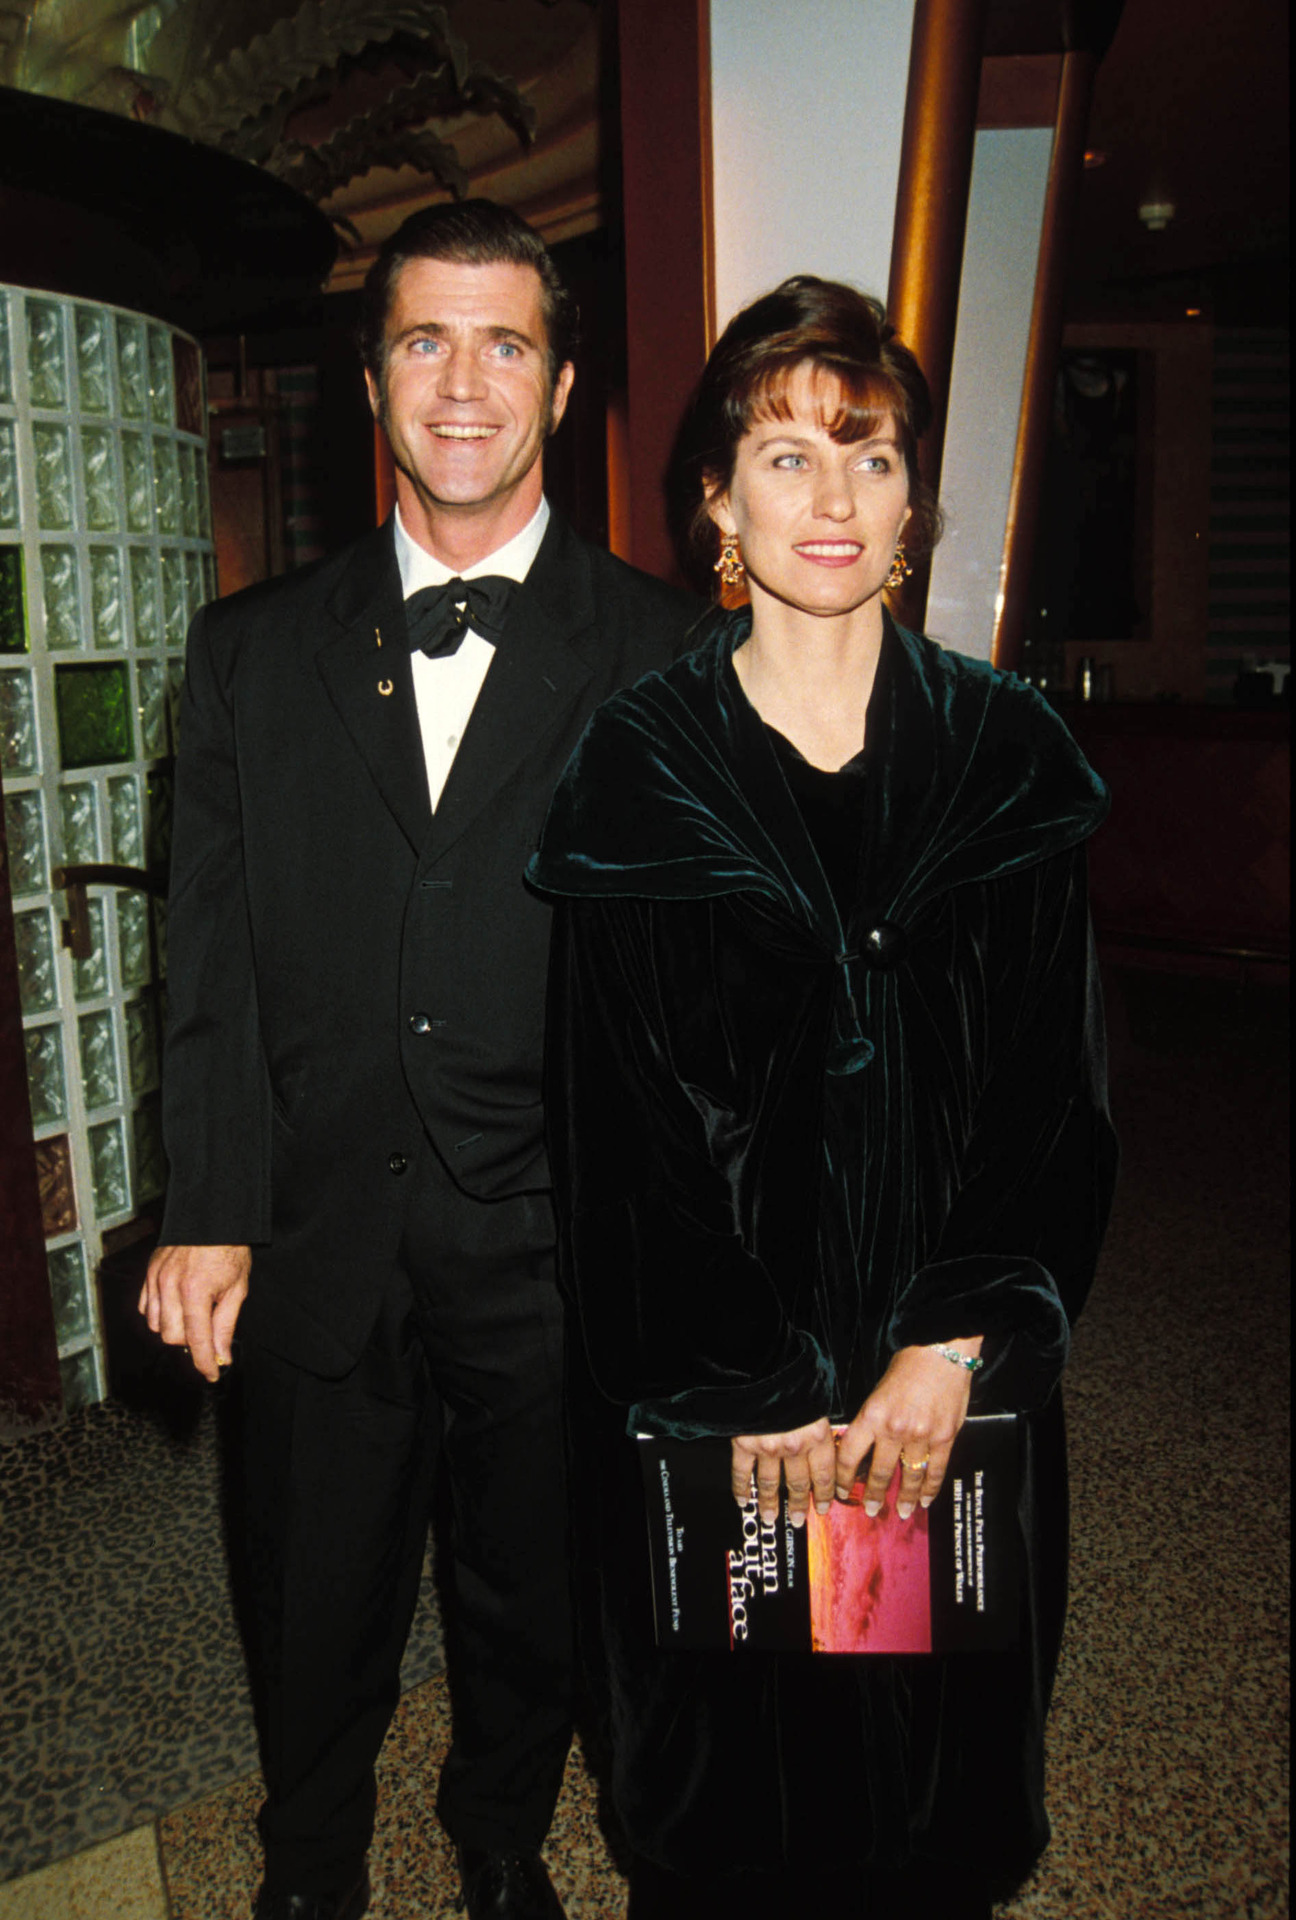 Neil Diamond and wife Marcia circa 1981 in New York City